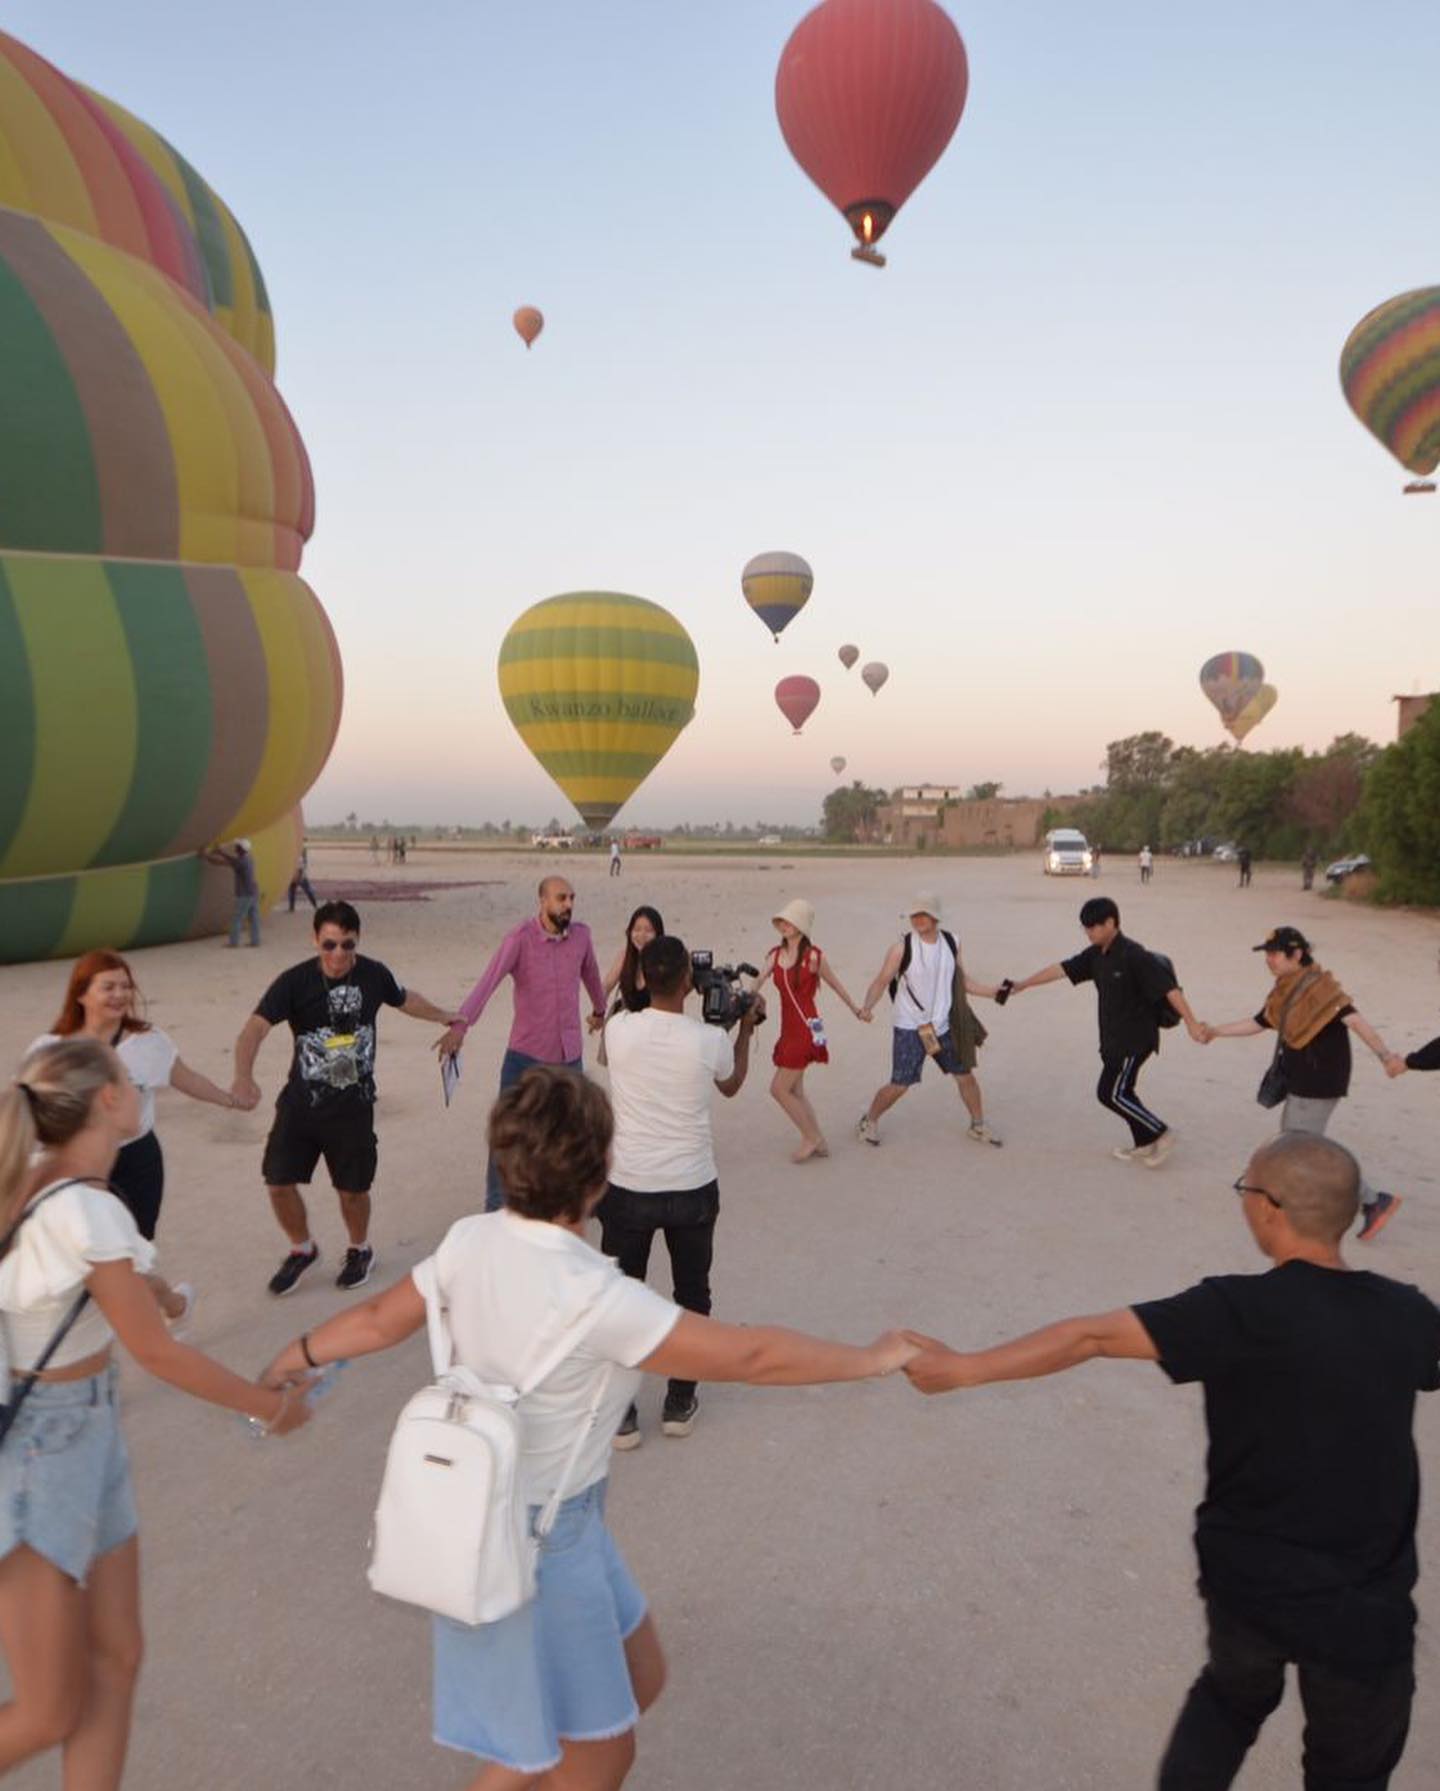 Rings of joy among tourists on balloon trips